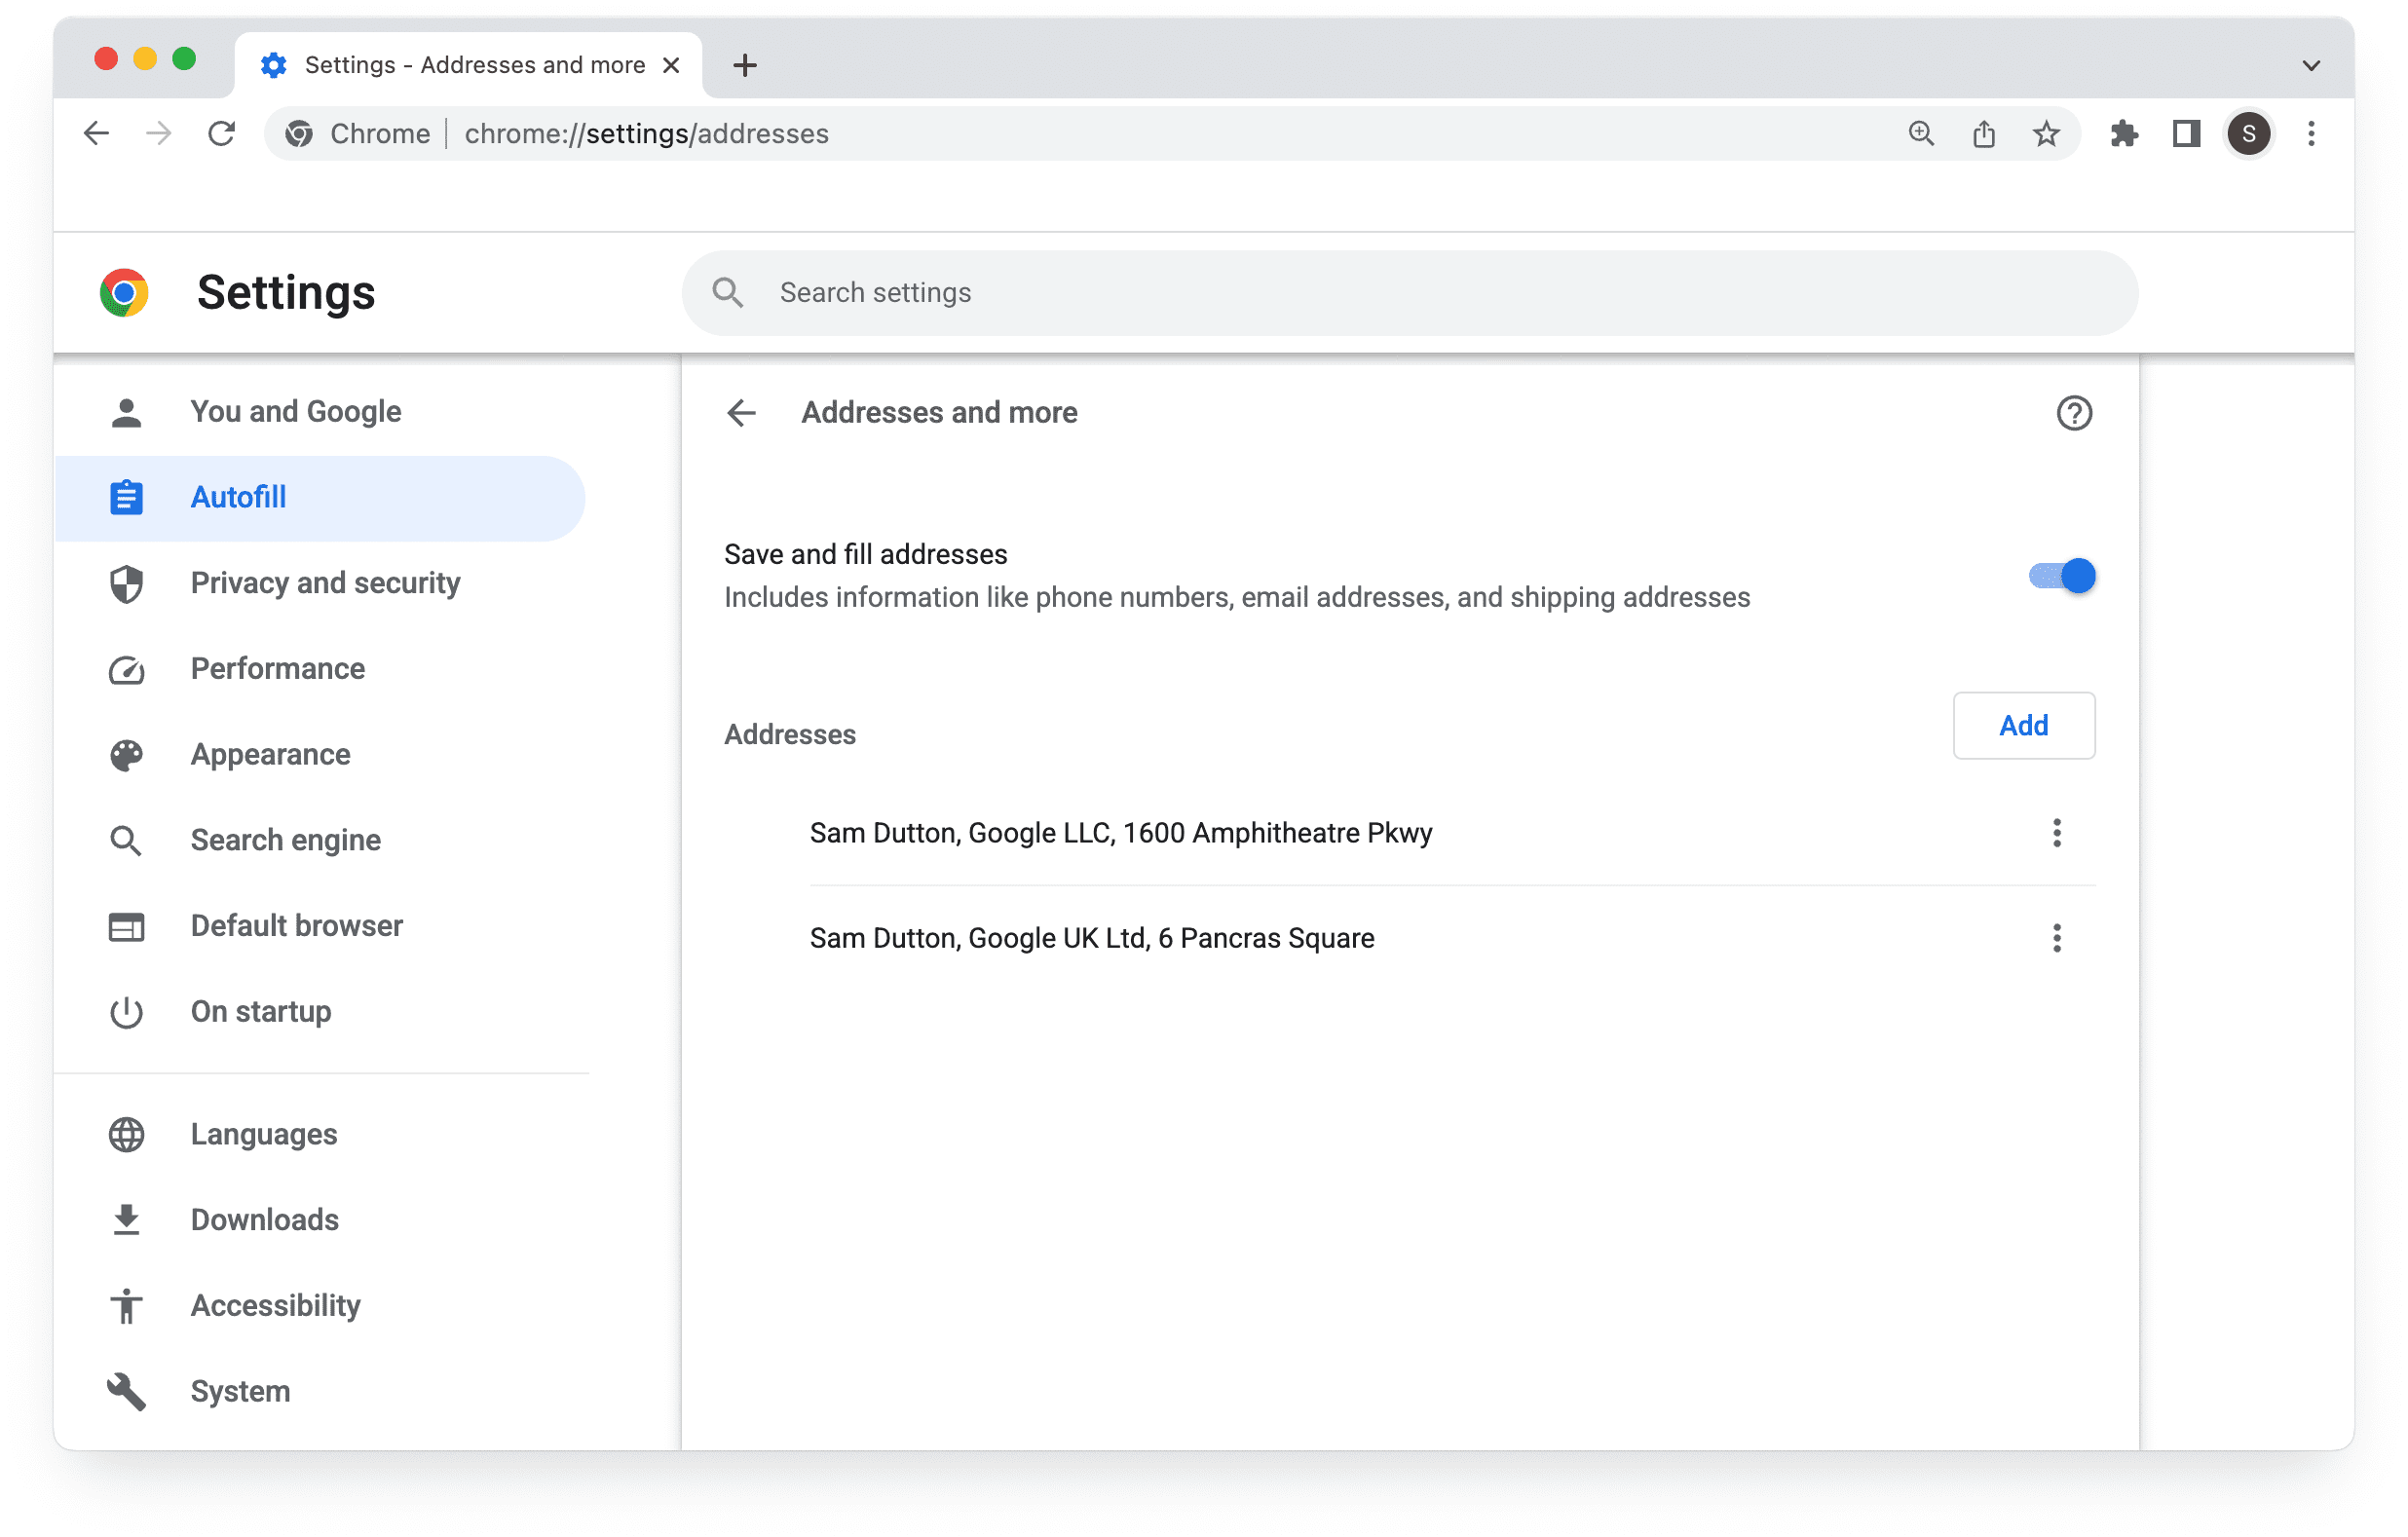 chrome://settings/addresses 页面，显示了两个示例地址